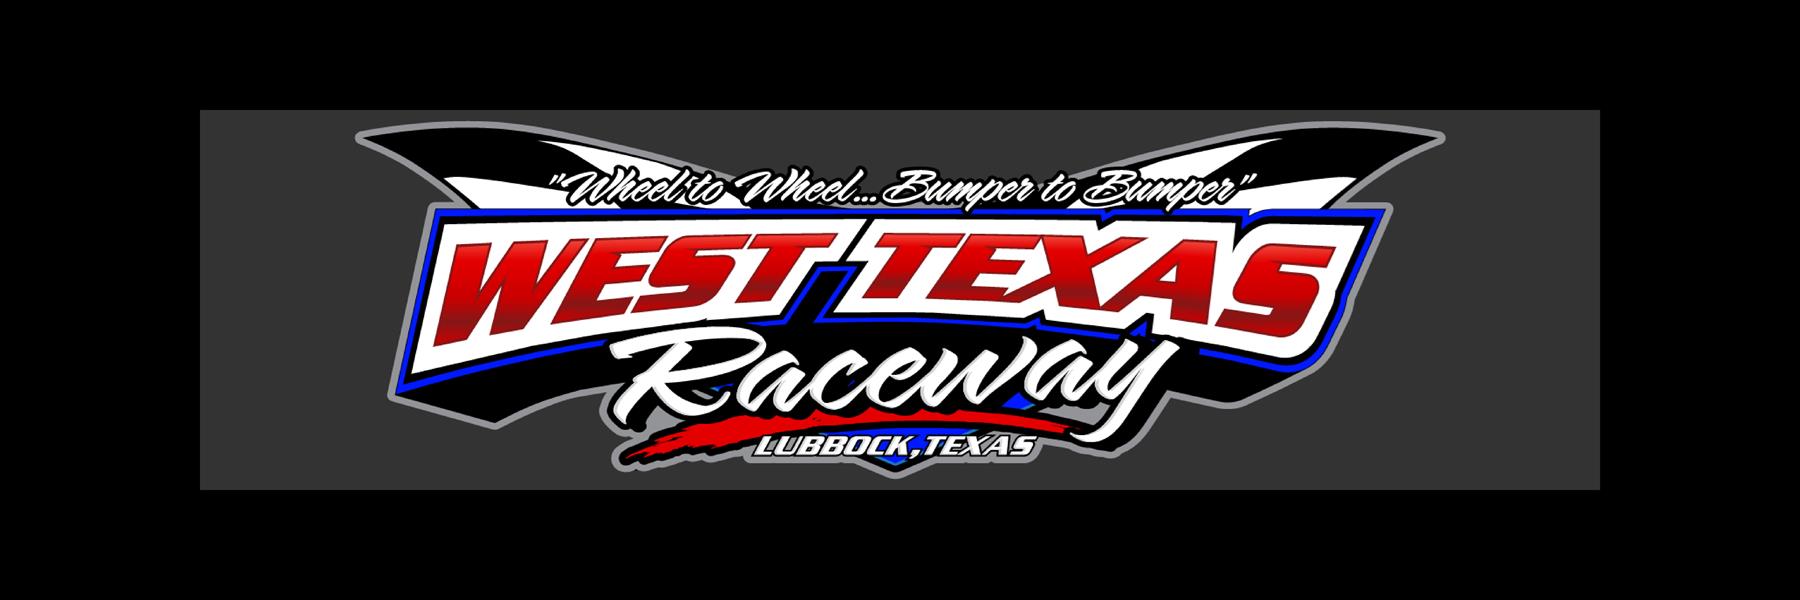 8/16/2019 - West Texas Raceway